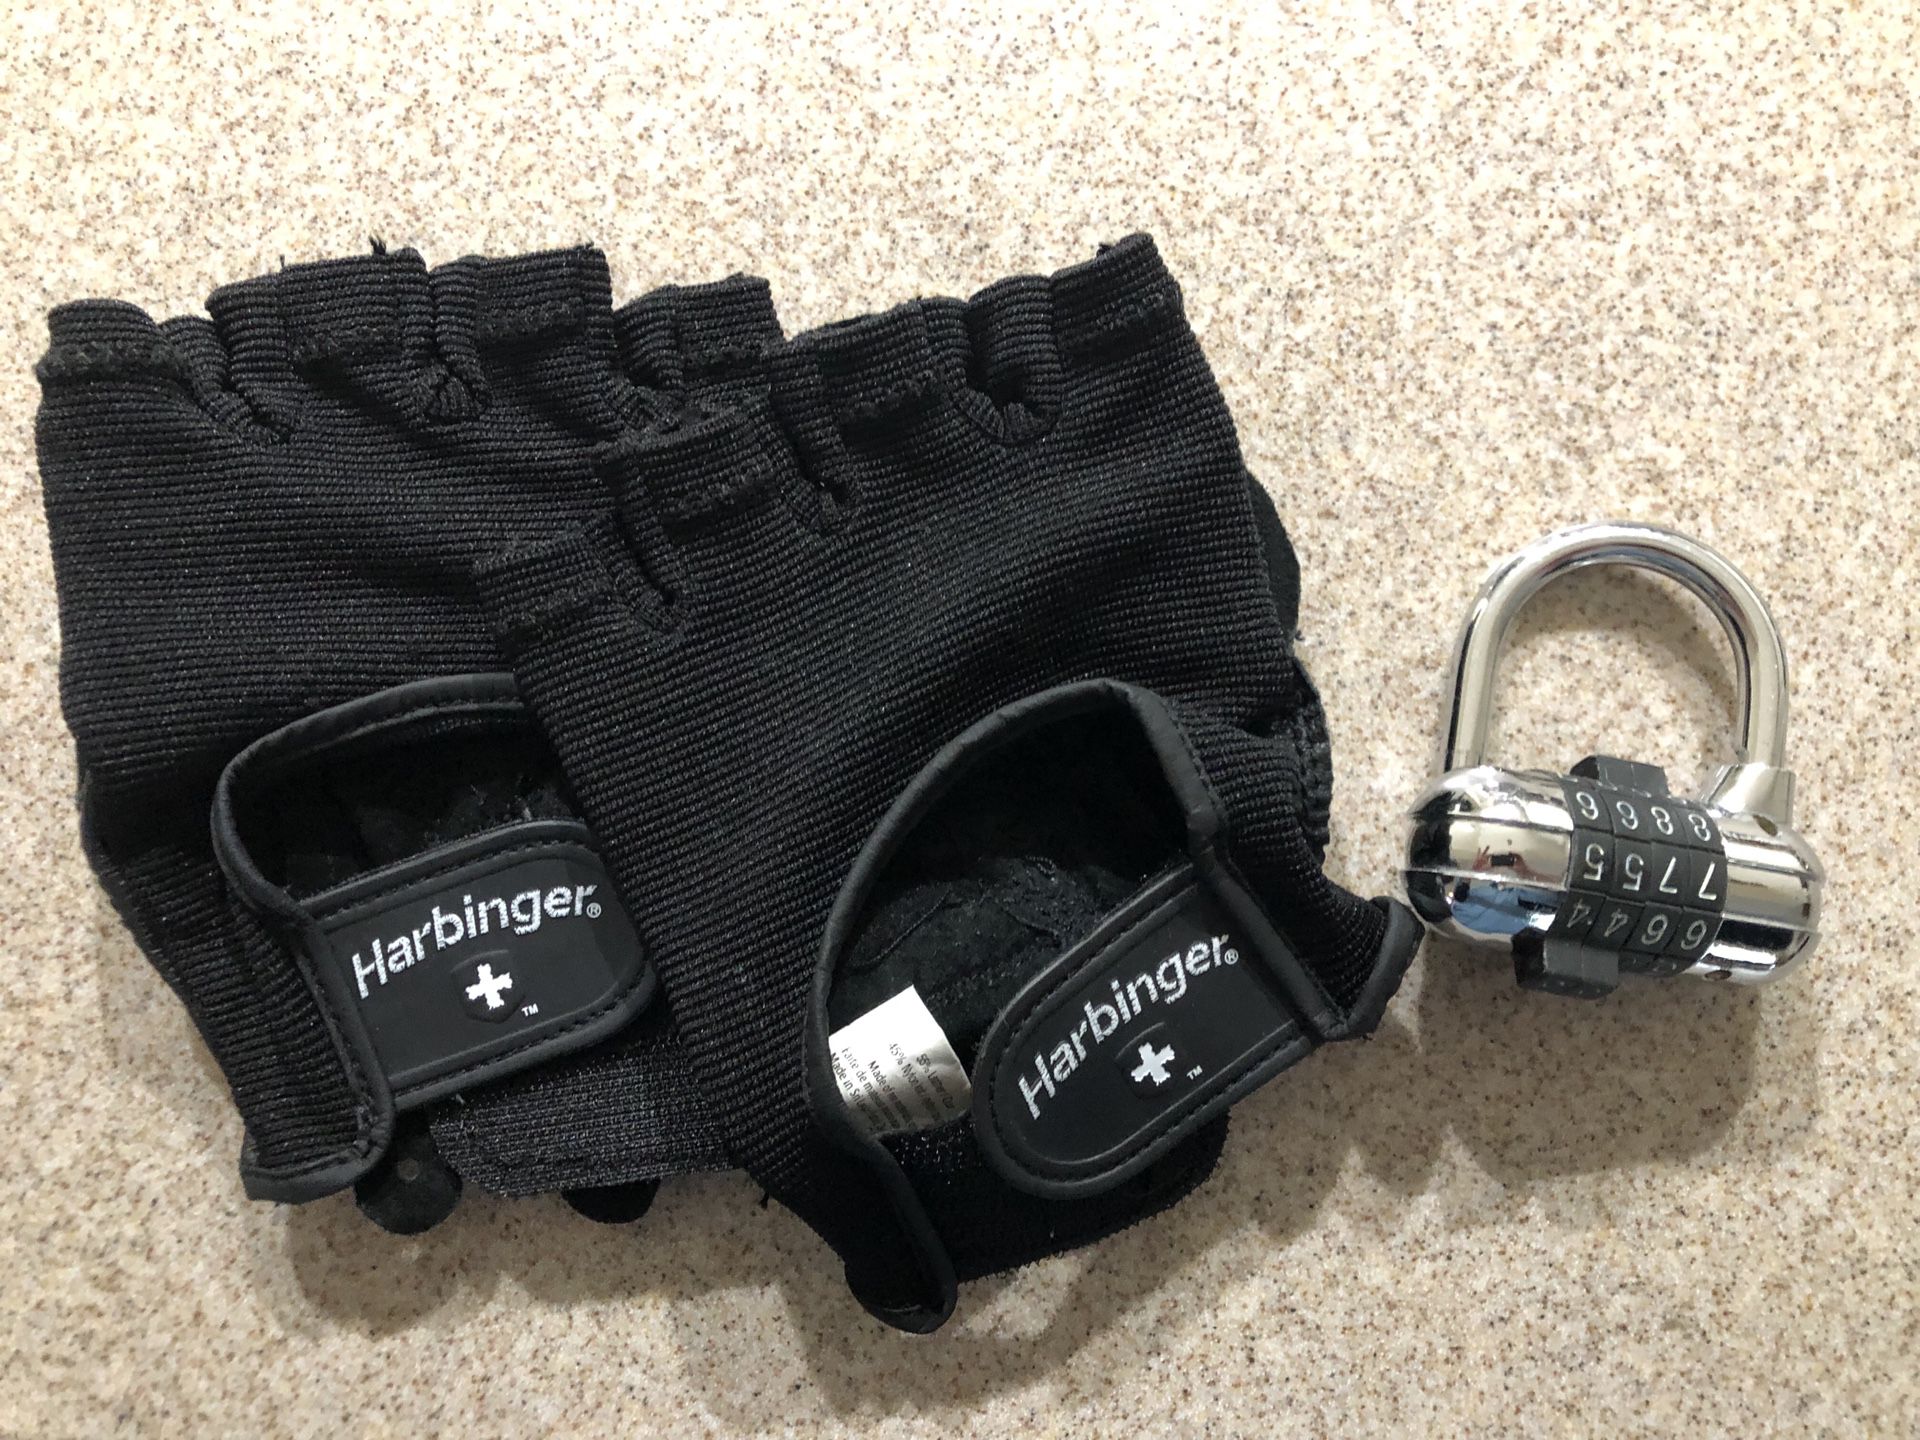 Harbinger gym gloves and lock